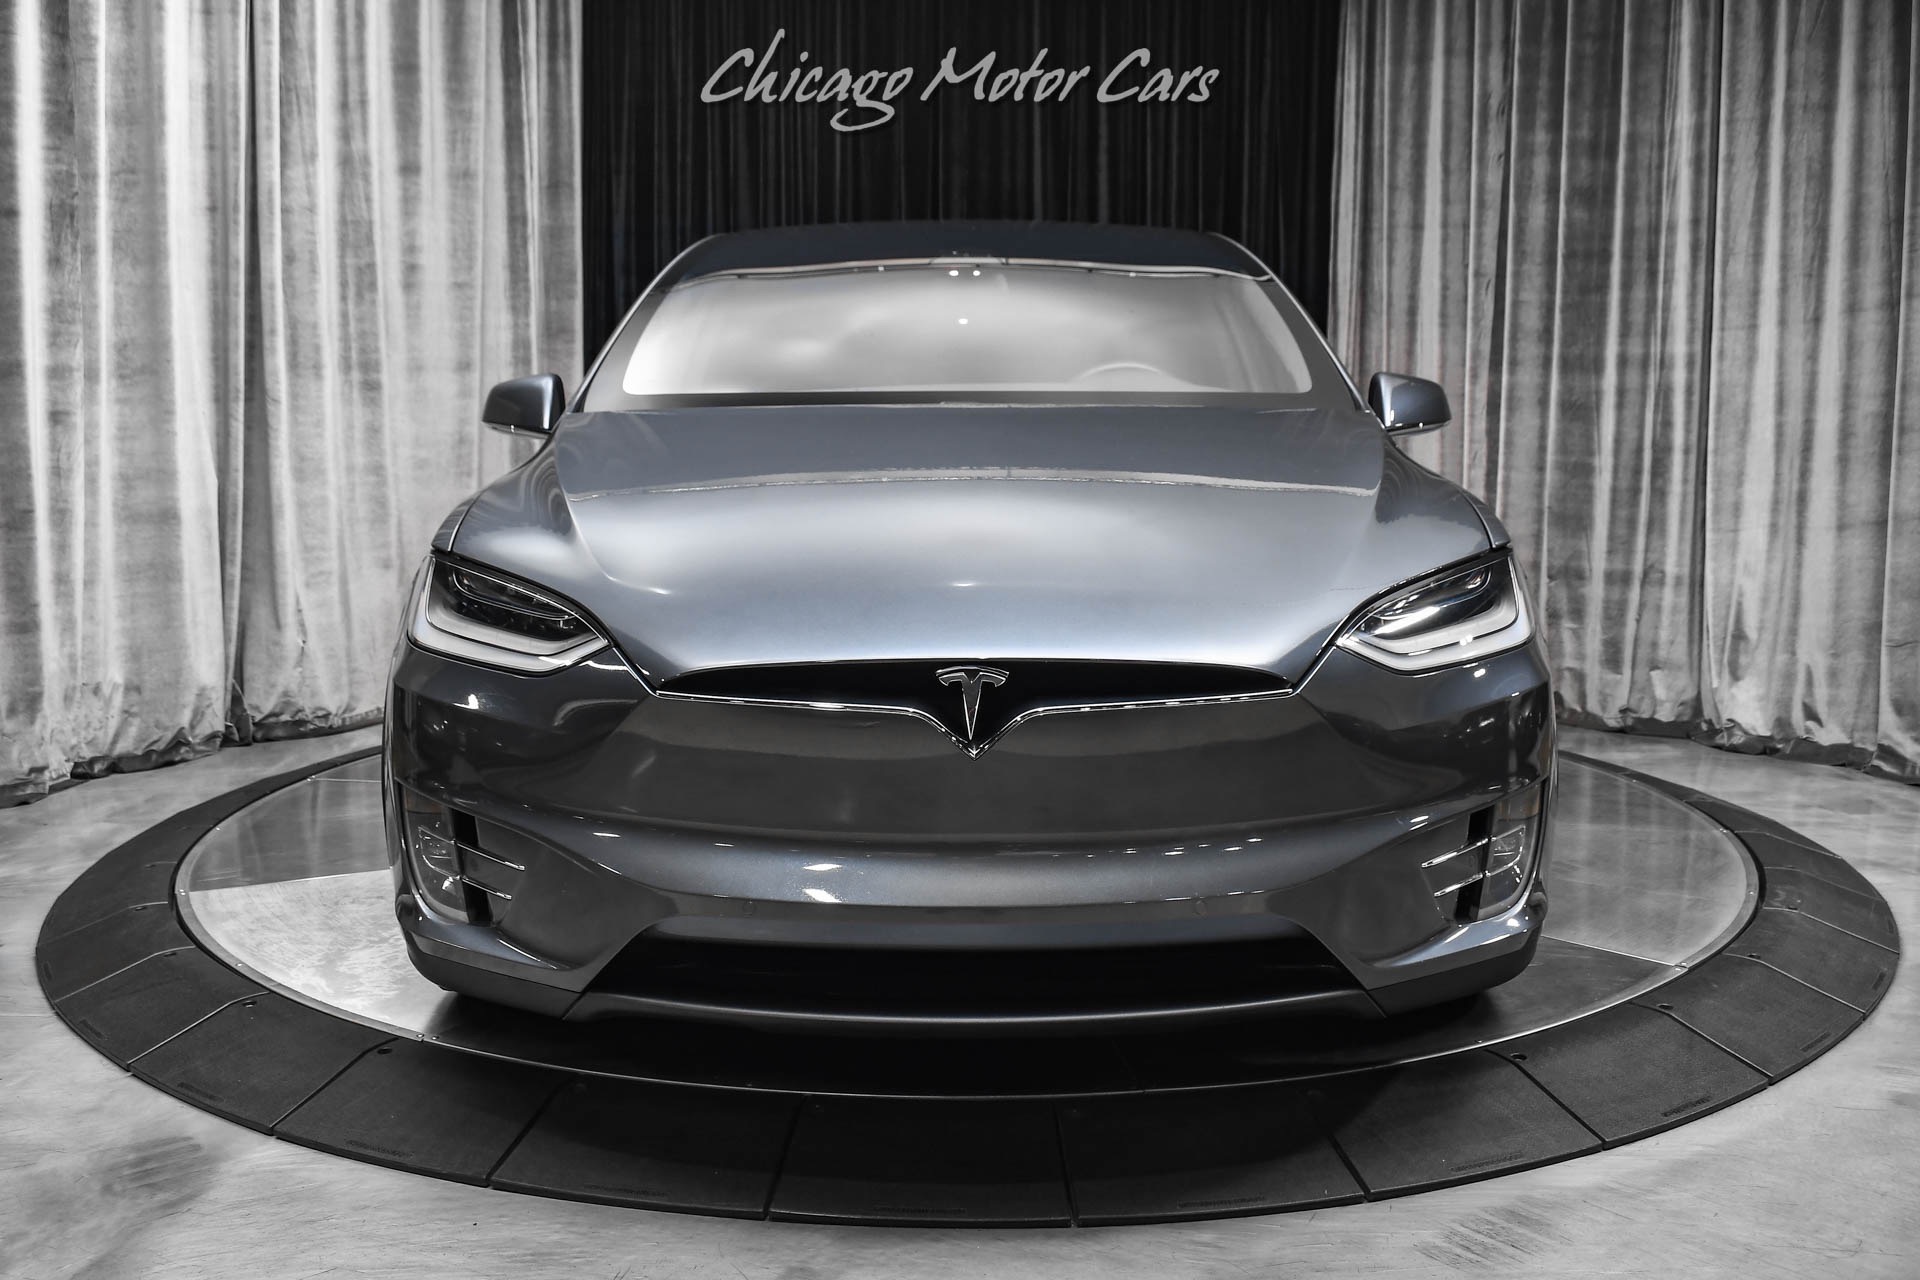 Used-2020-Tesla-Model-X-Long-Range-Plus-SUV-FULL-SELF-DRIVING-Premium-Upgrade-Pkg-5-Seat-Config